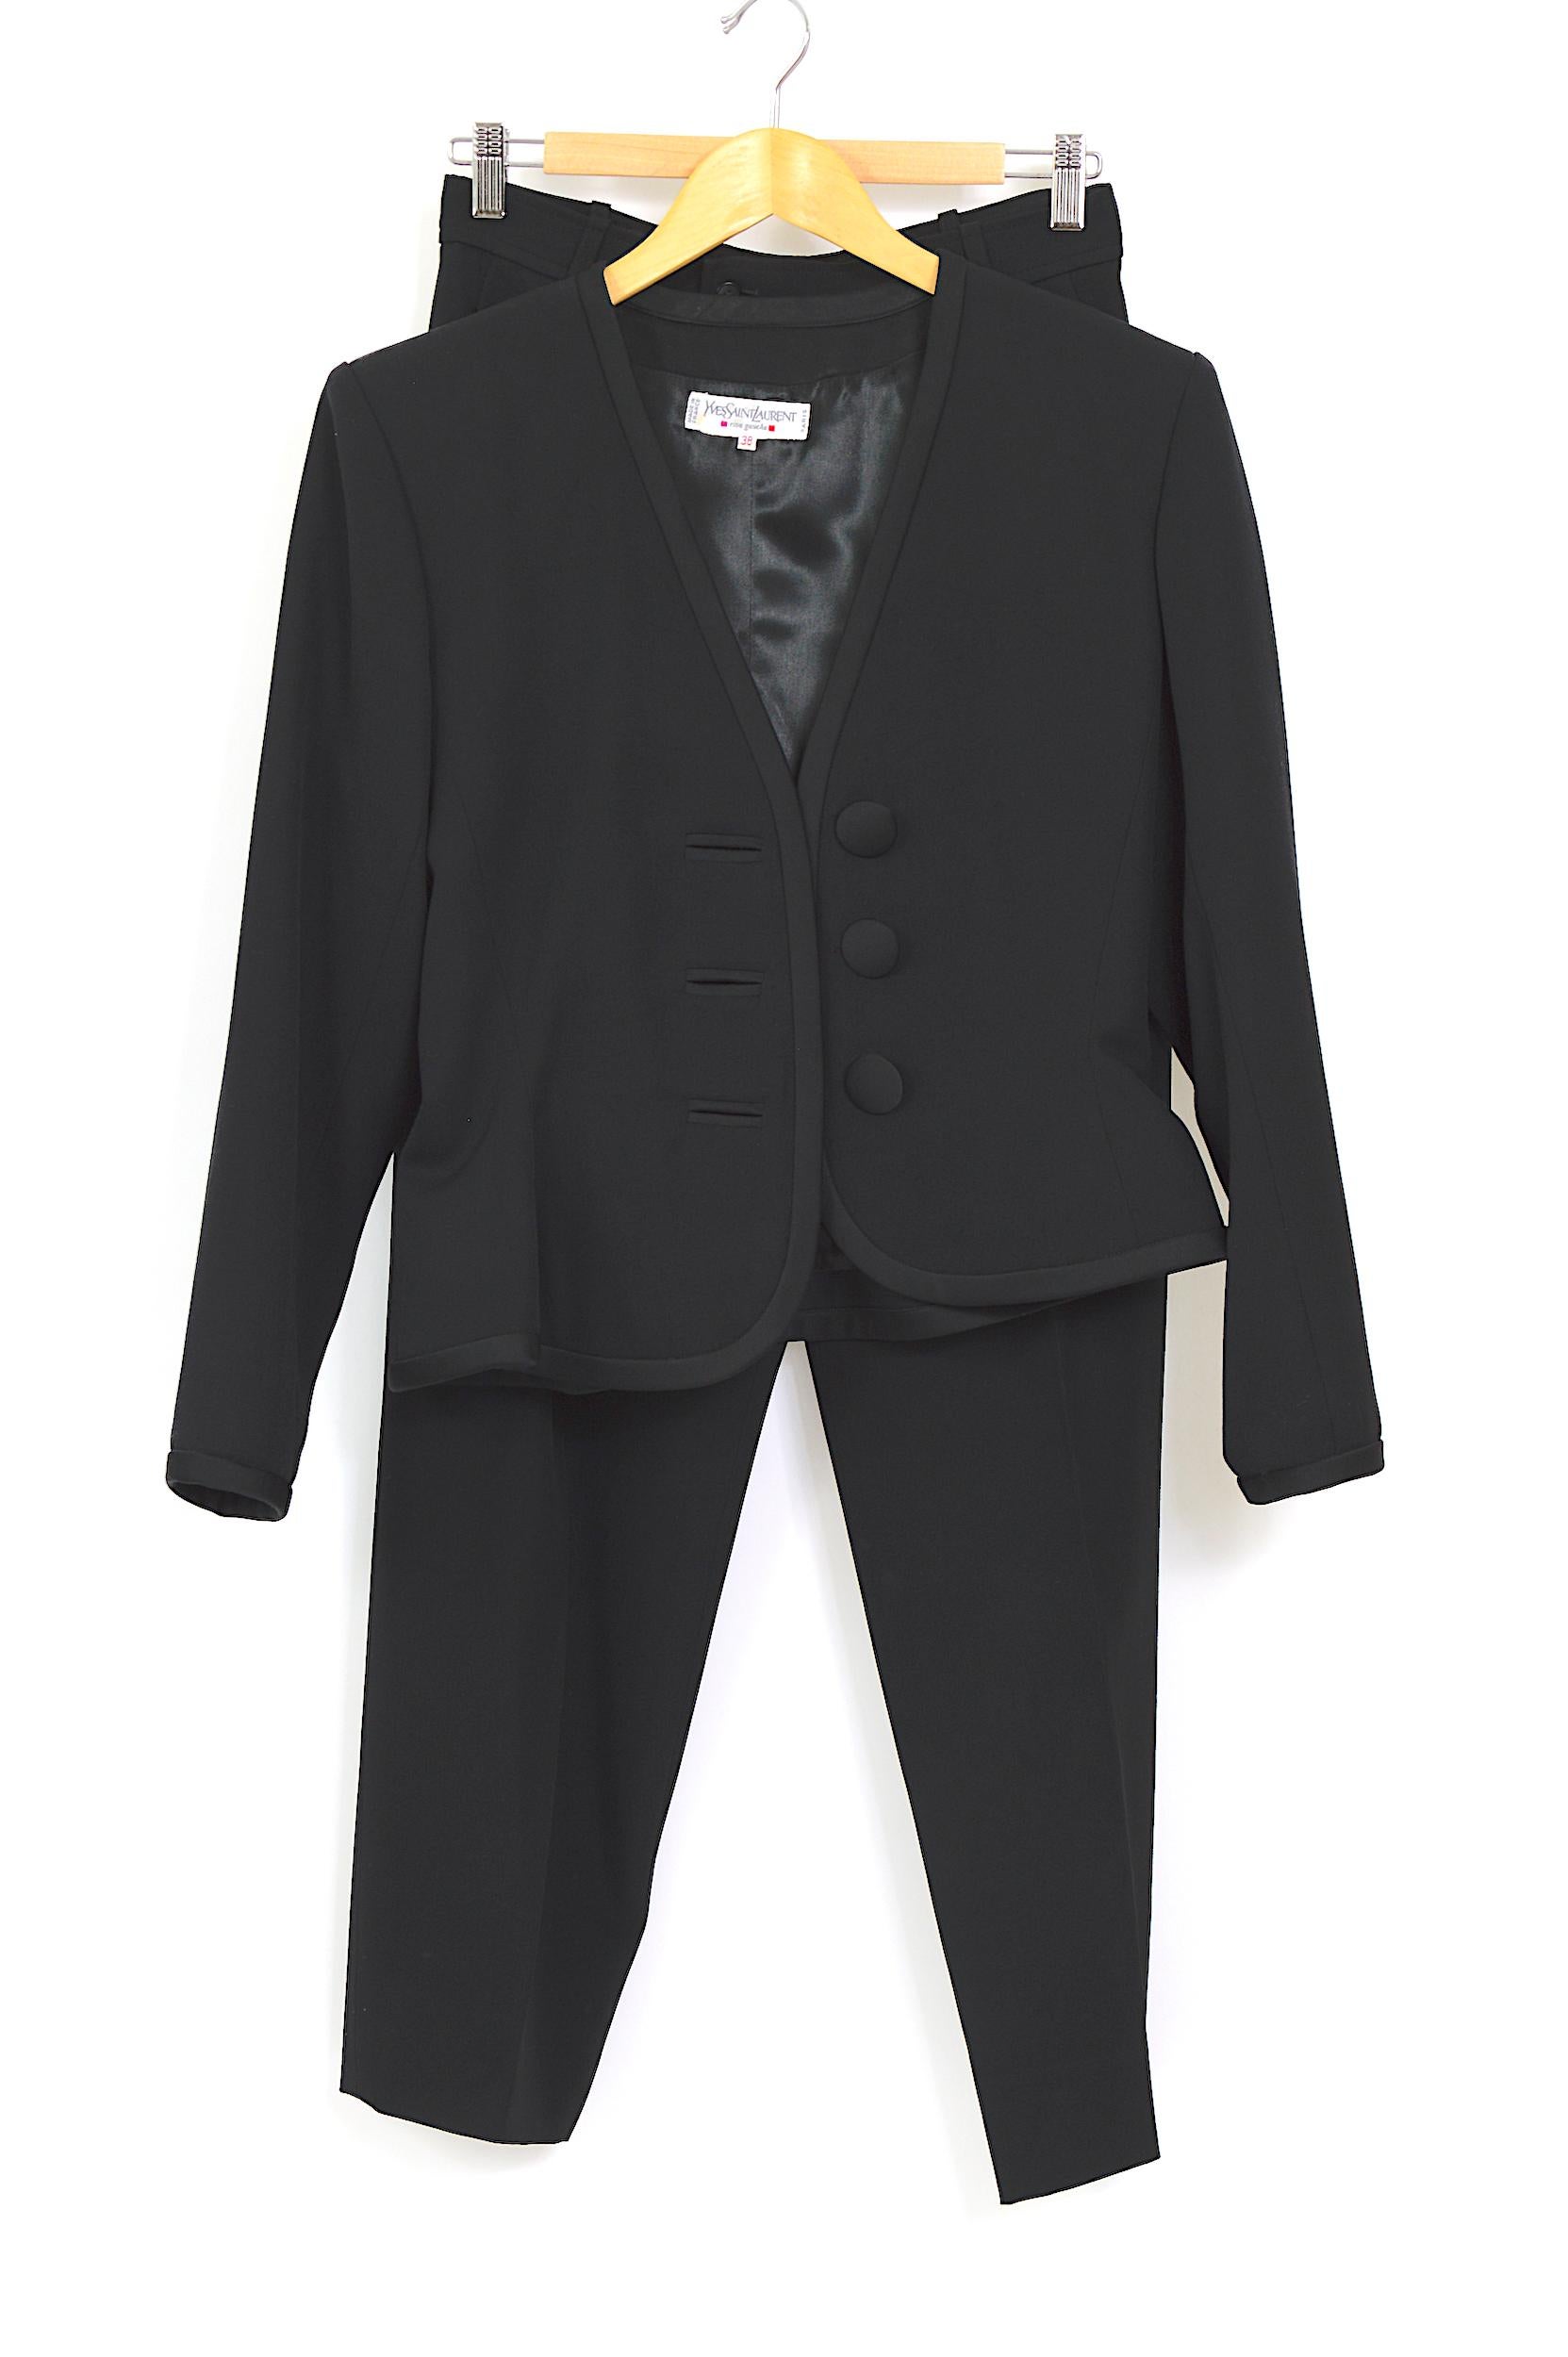 Yves Saint Laurent jet black vintage 80s large shoulders smoking evening suit  3